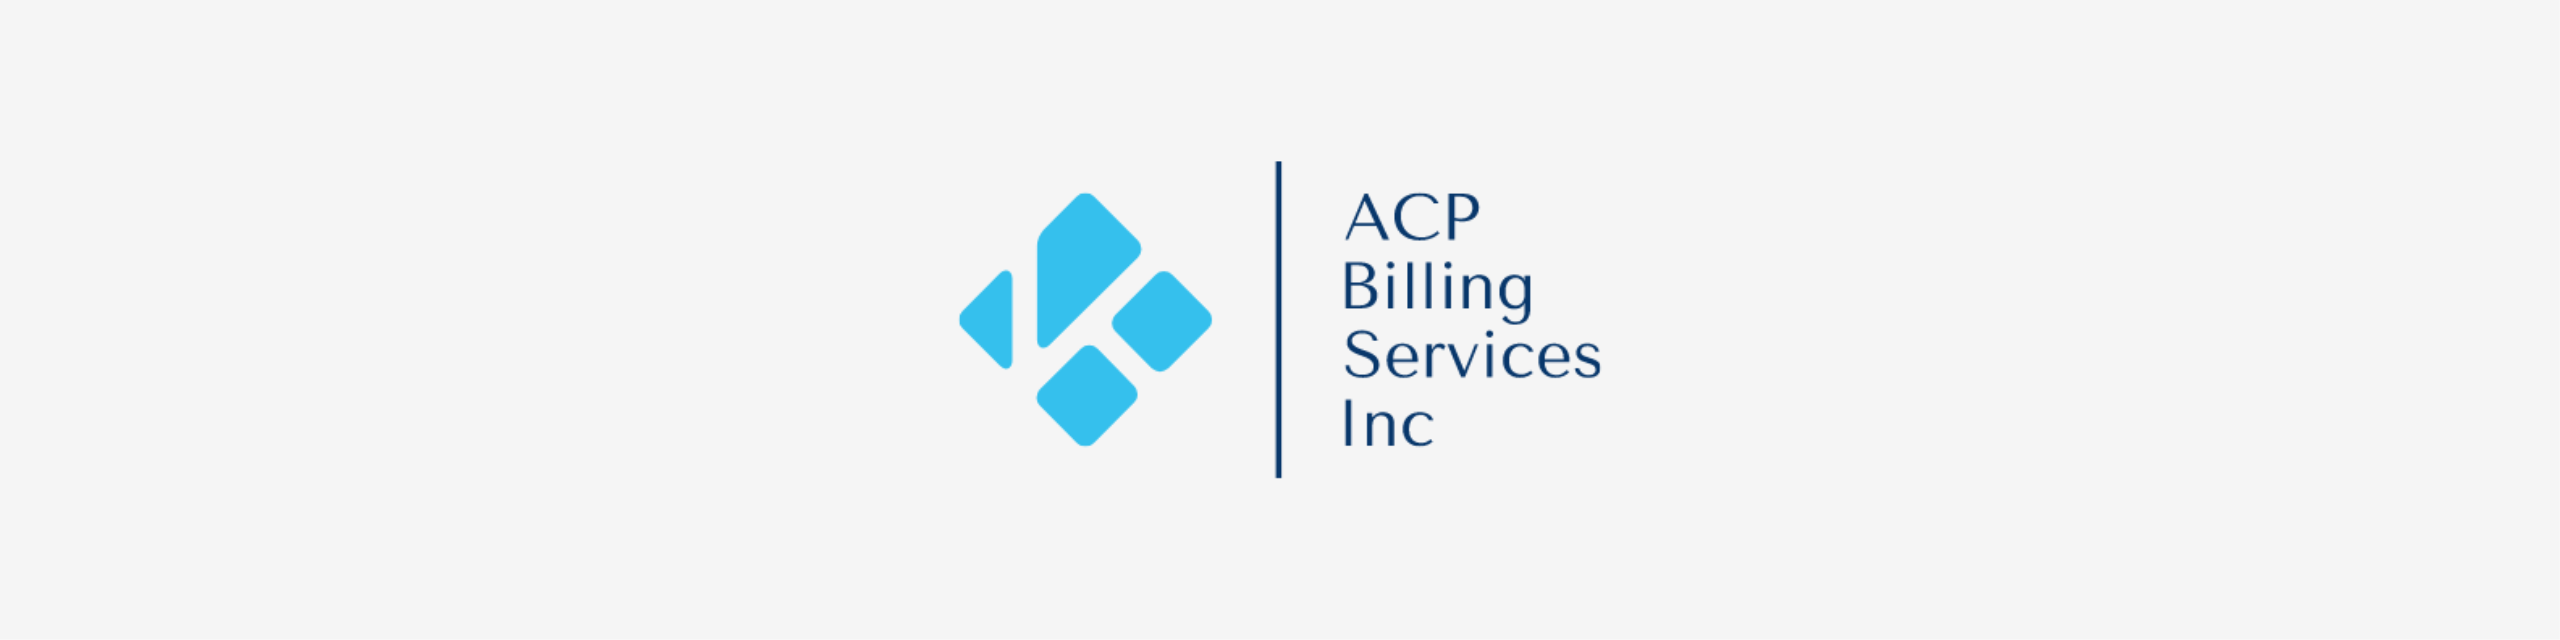 ACP Billing Services Inc Logo